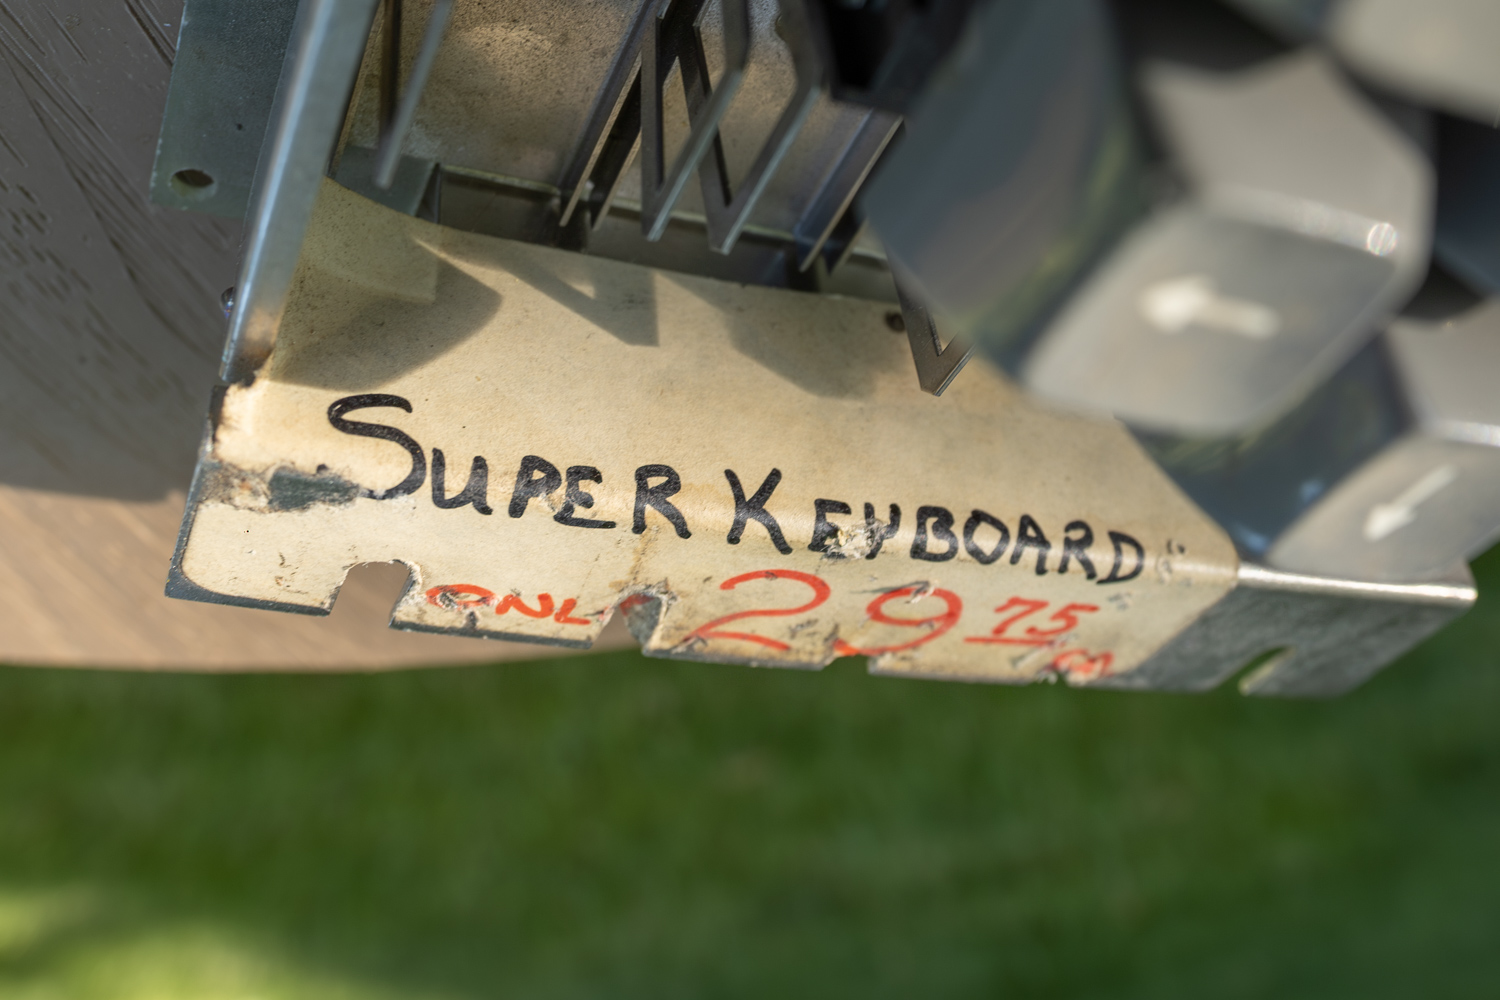 “Super Keyboard” sticker / price tag